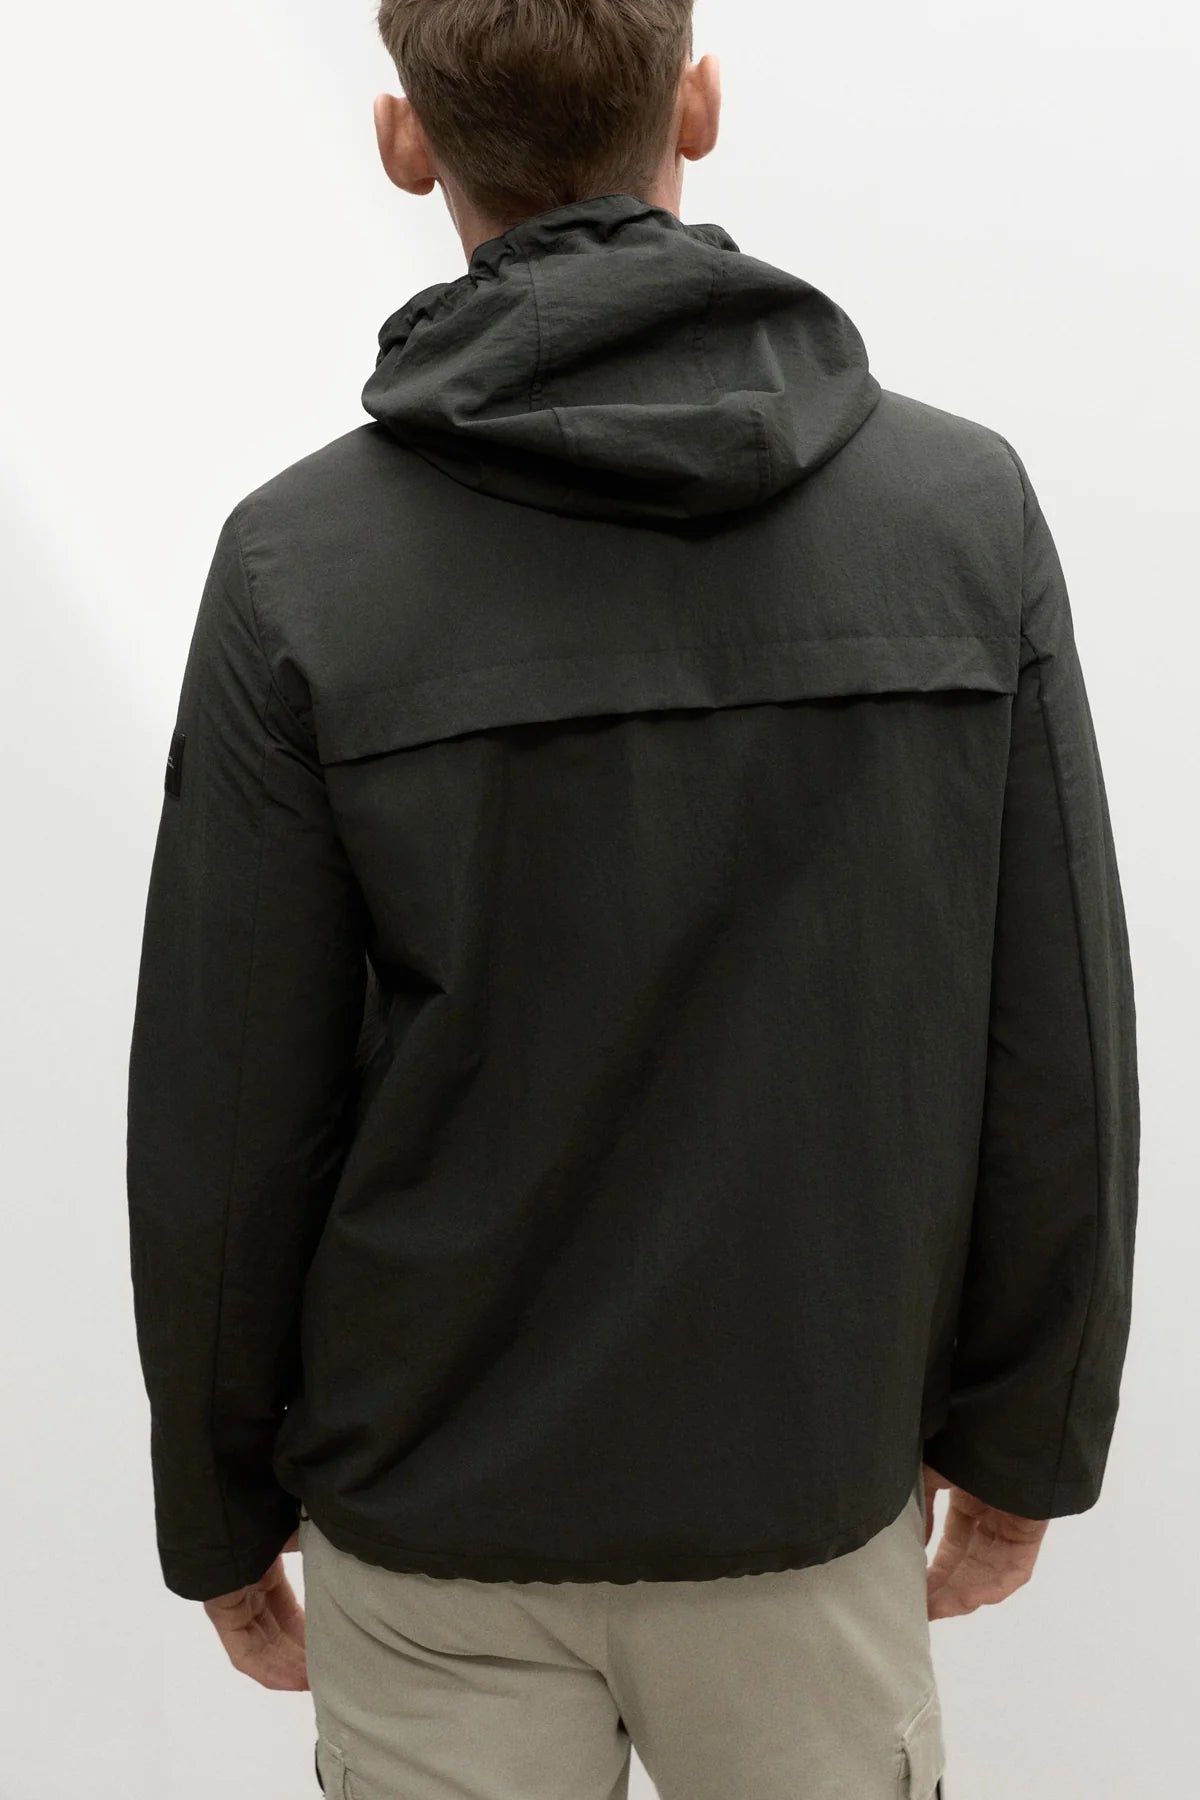 Ecoalf M's Beniaalf Jacket - 100% Recycled nylon Charcoal Jacket